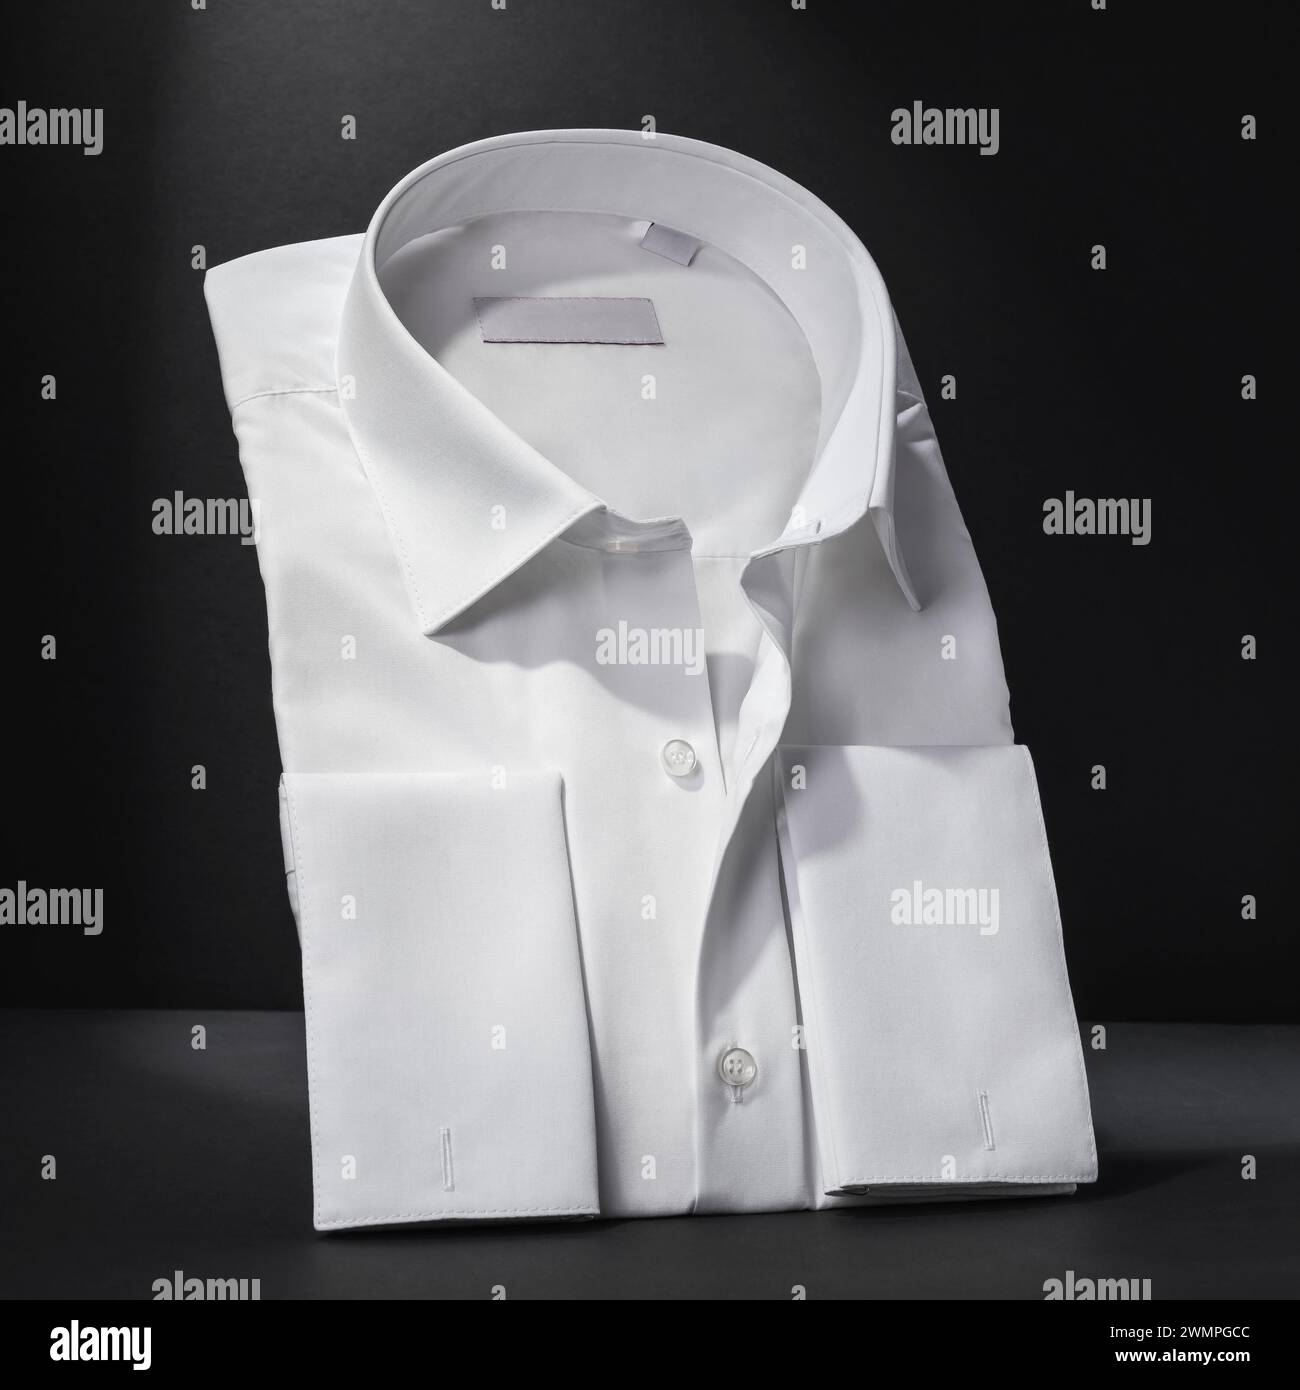 Camisa blanca clásica doblada de manga larga de los hombres sobre un fondo oscuro, primer plano Foto de stock